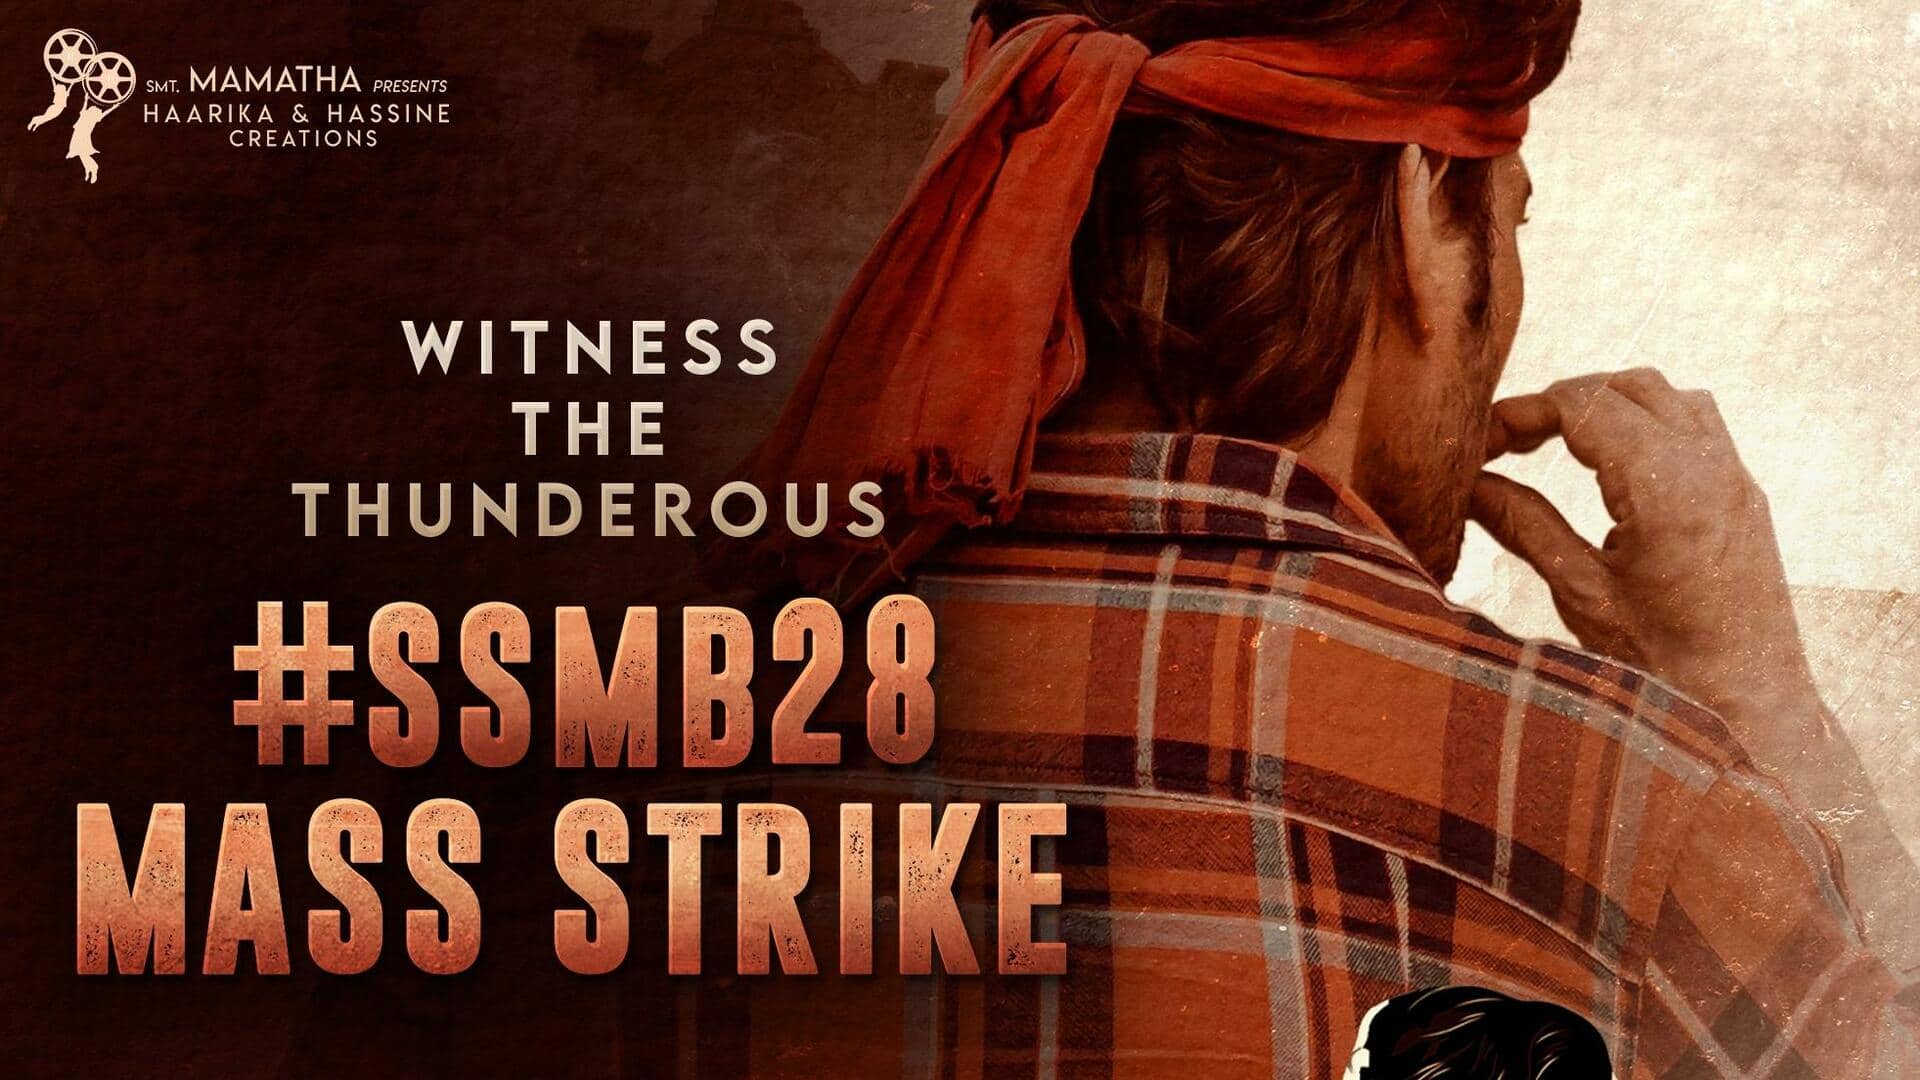 #SSMB 28: టైటిల్ రిలీజ్ కు టైమ్ ఫిక్స్ చేసిన టీమ్ 